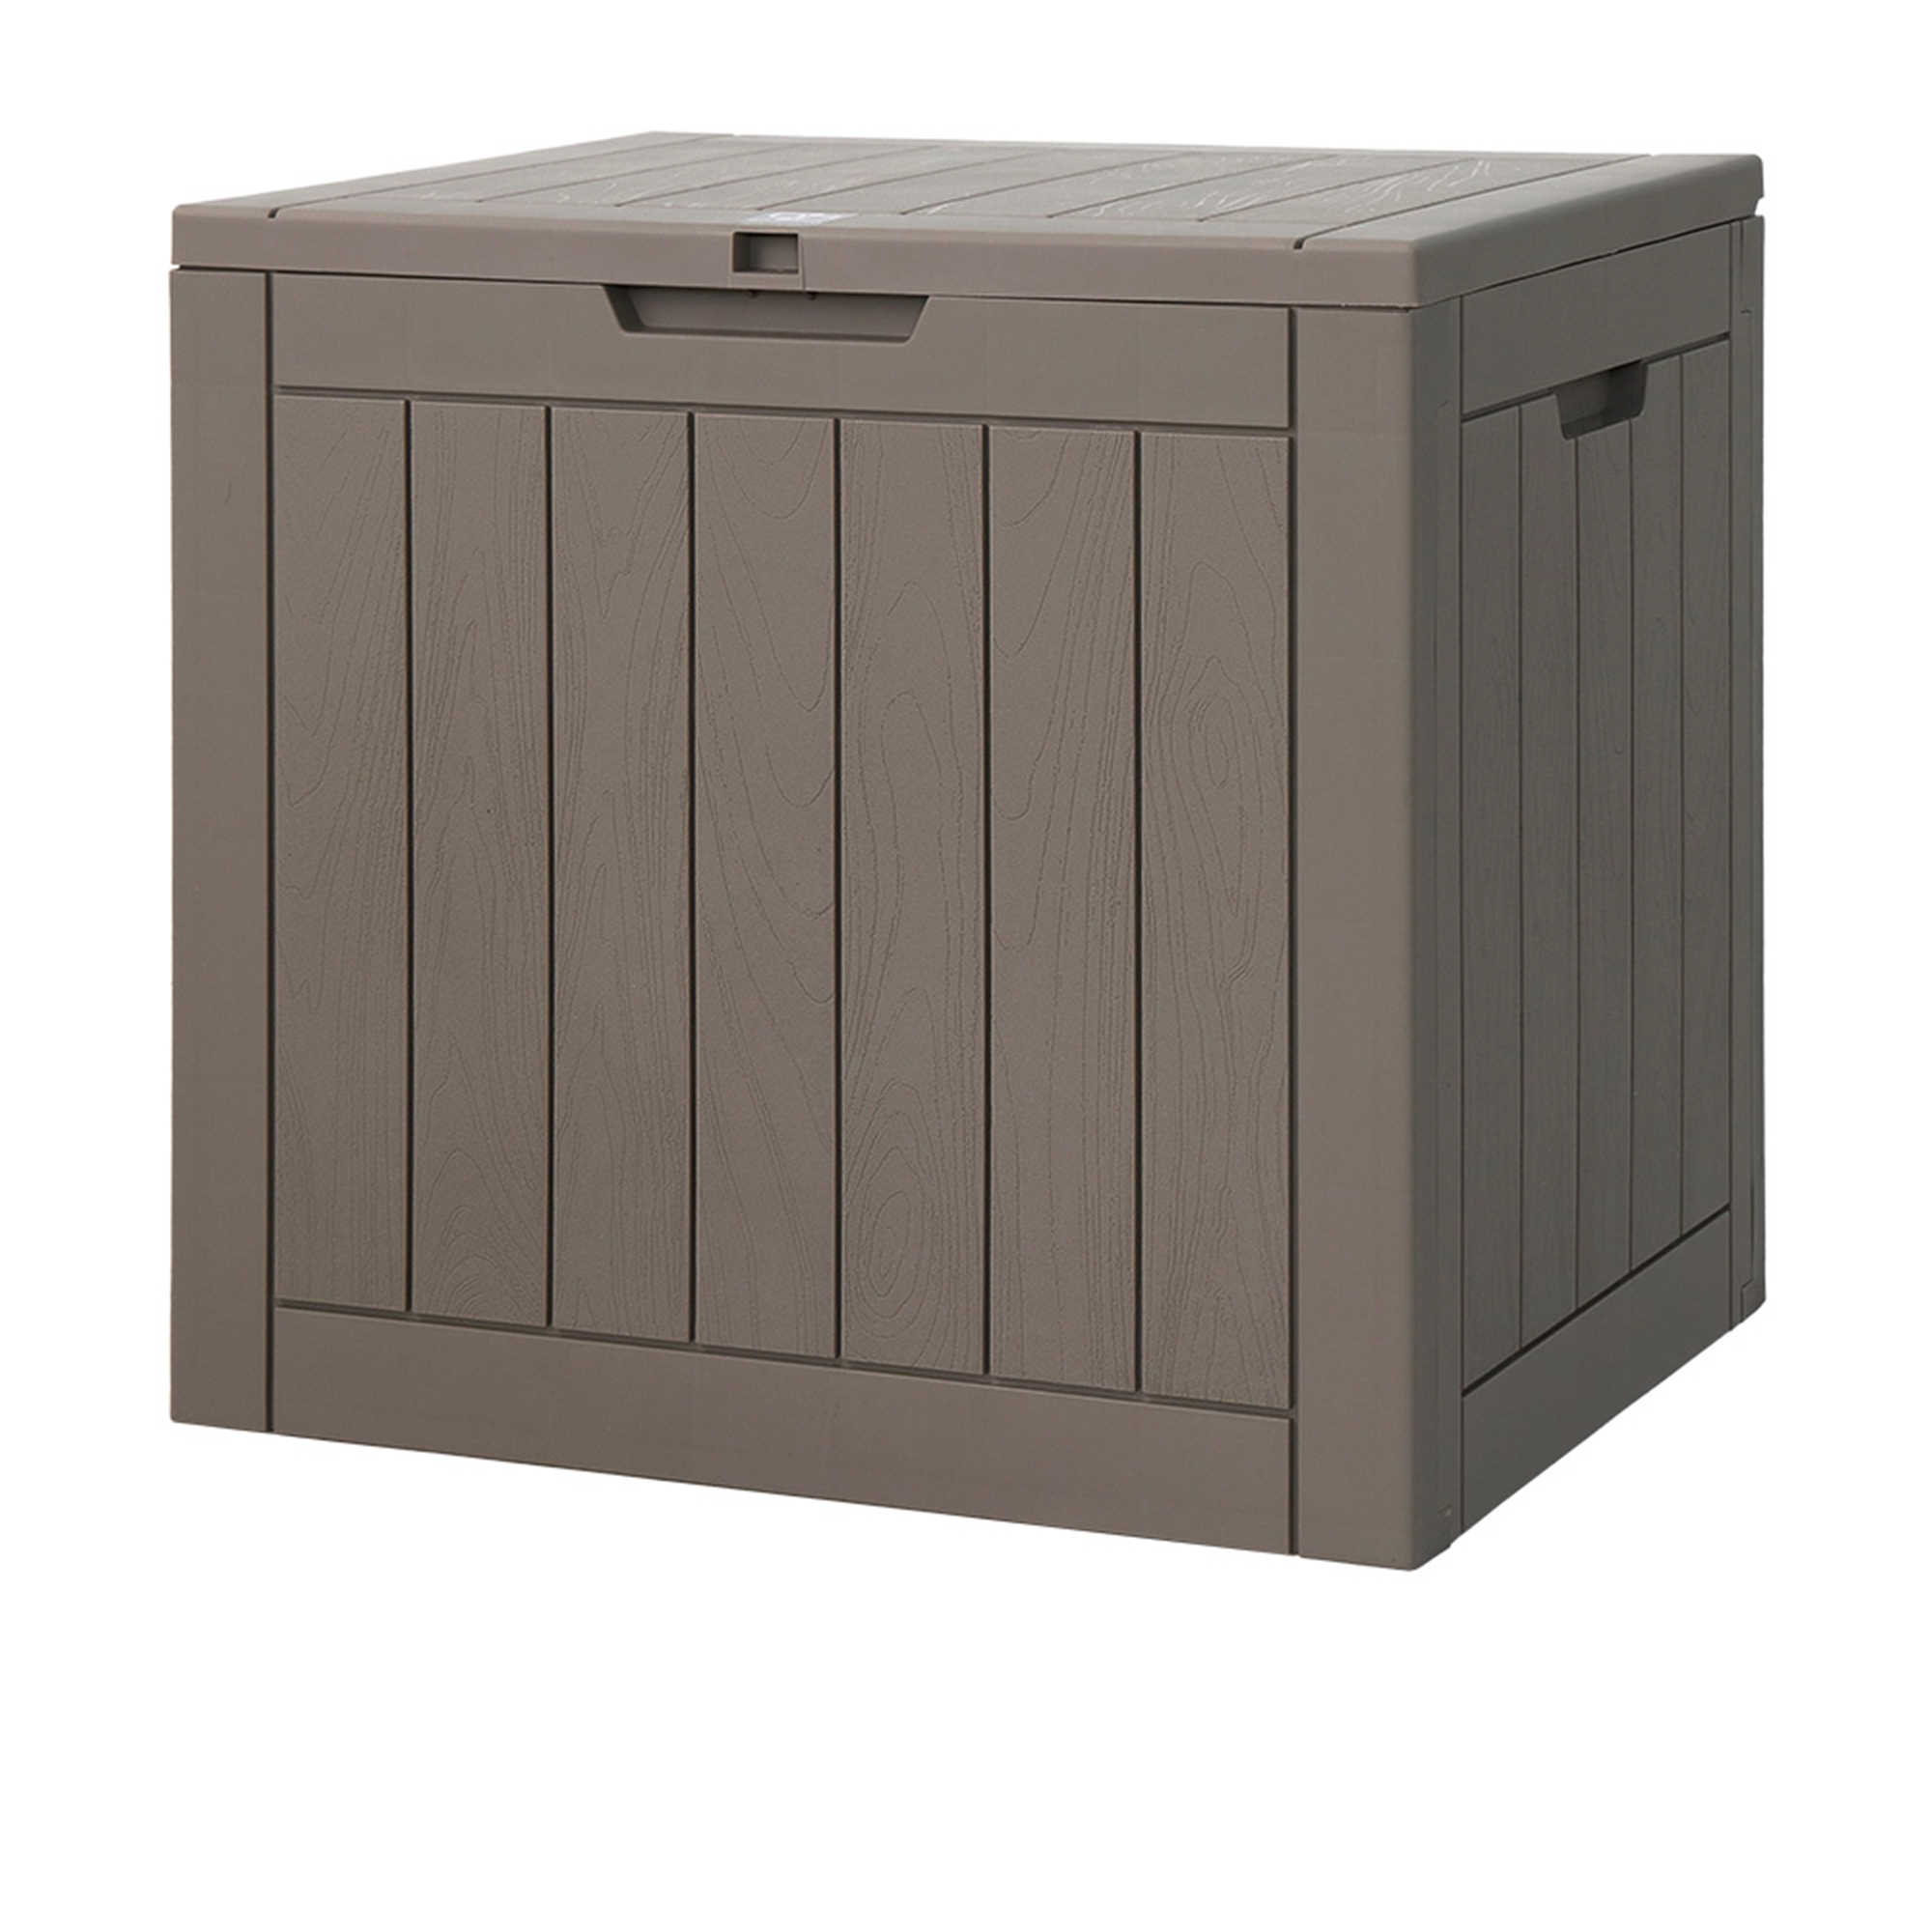 Gardeon Outdoor Storage Box 118L Grey Image 1